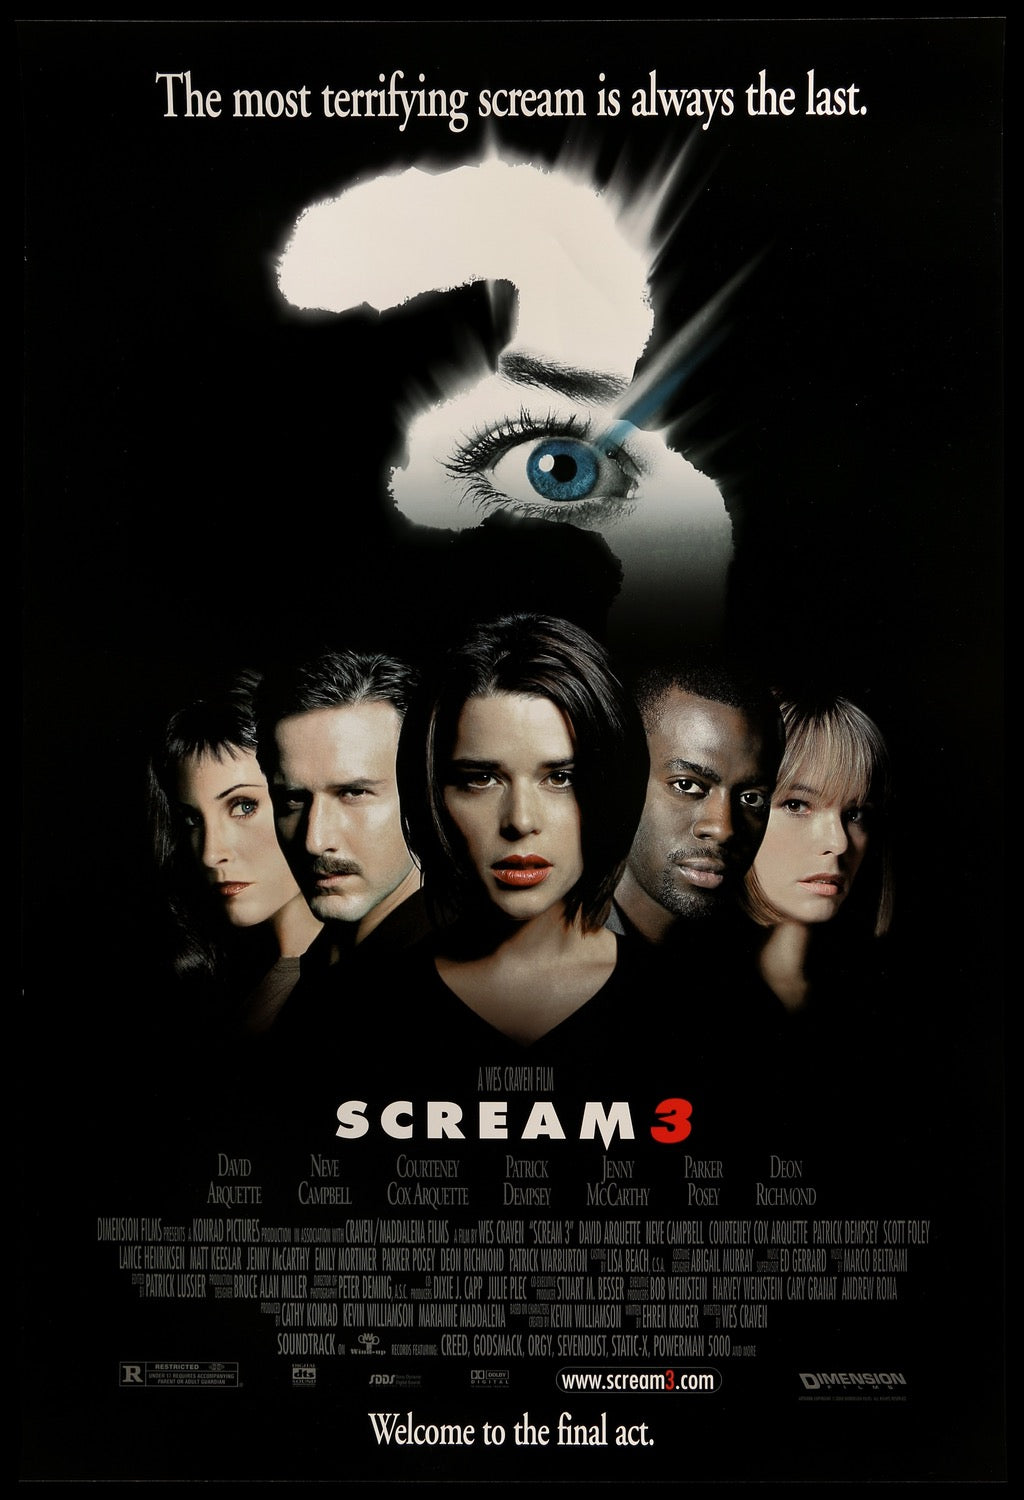 Scream 3 (2000) original movie poster for sale at Original Film Art